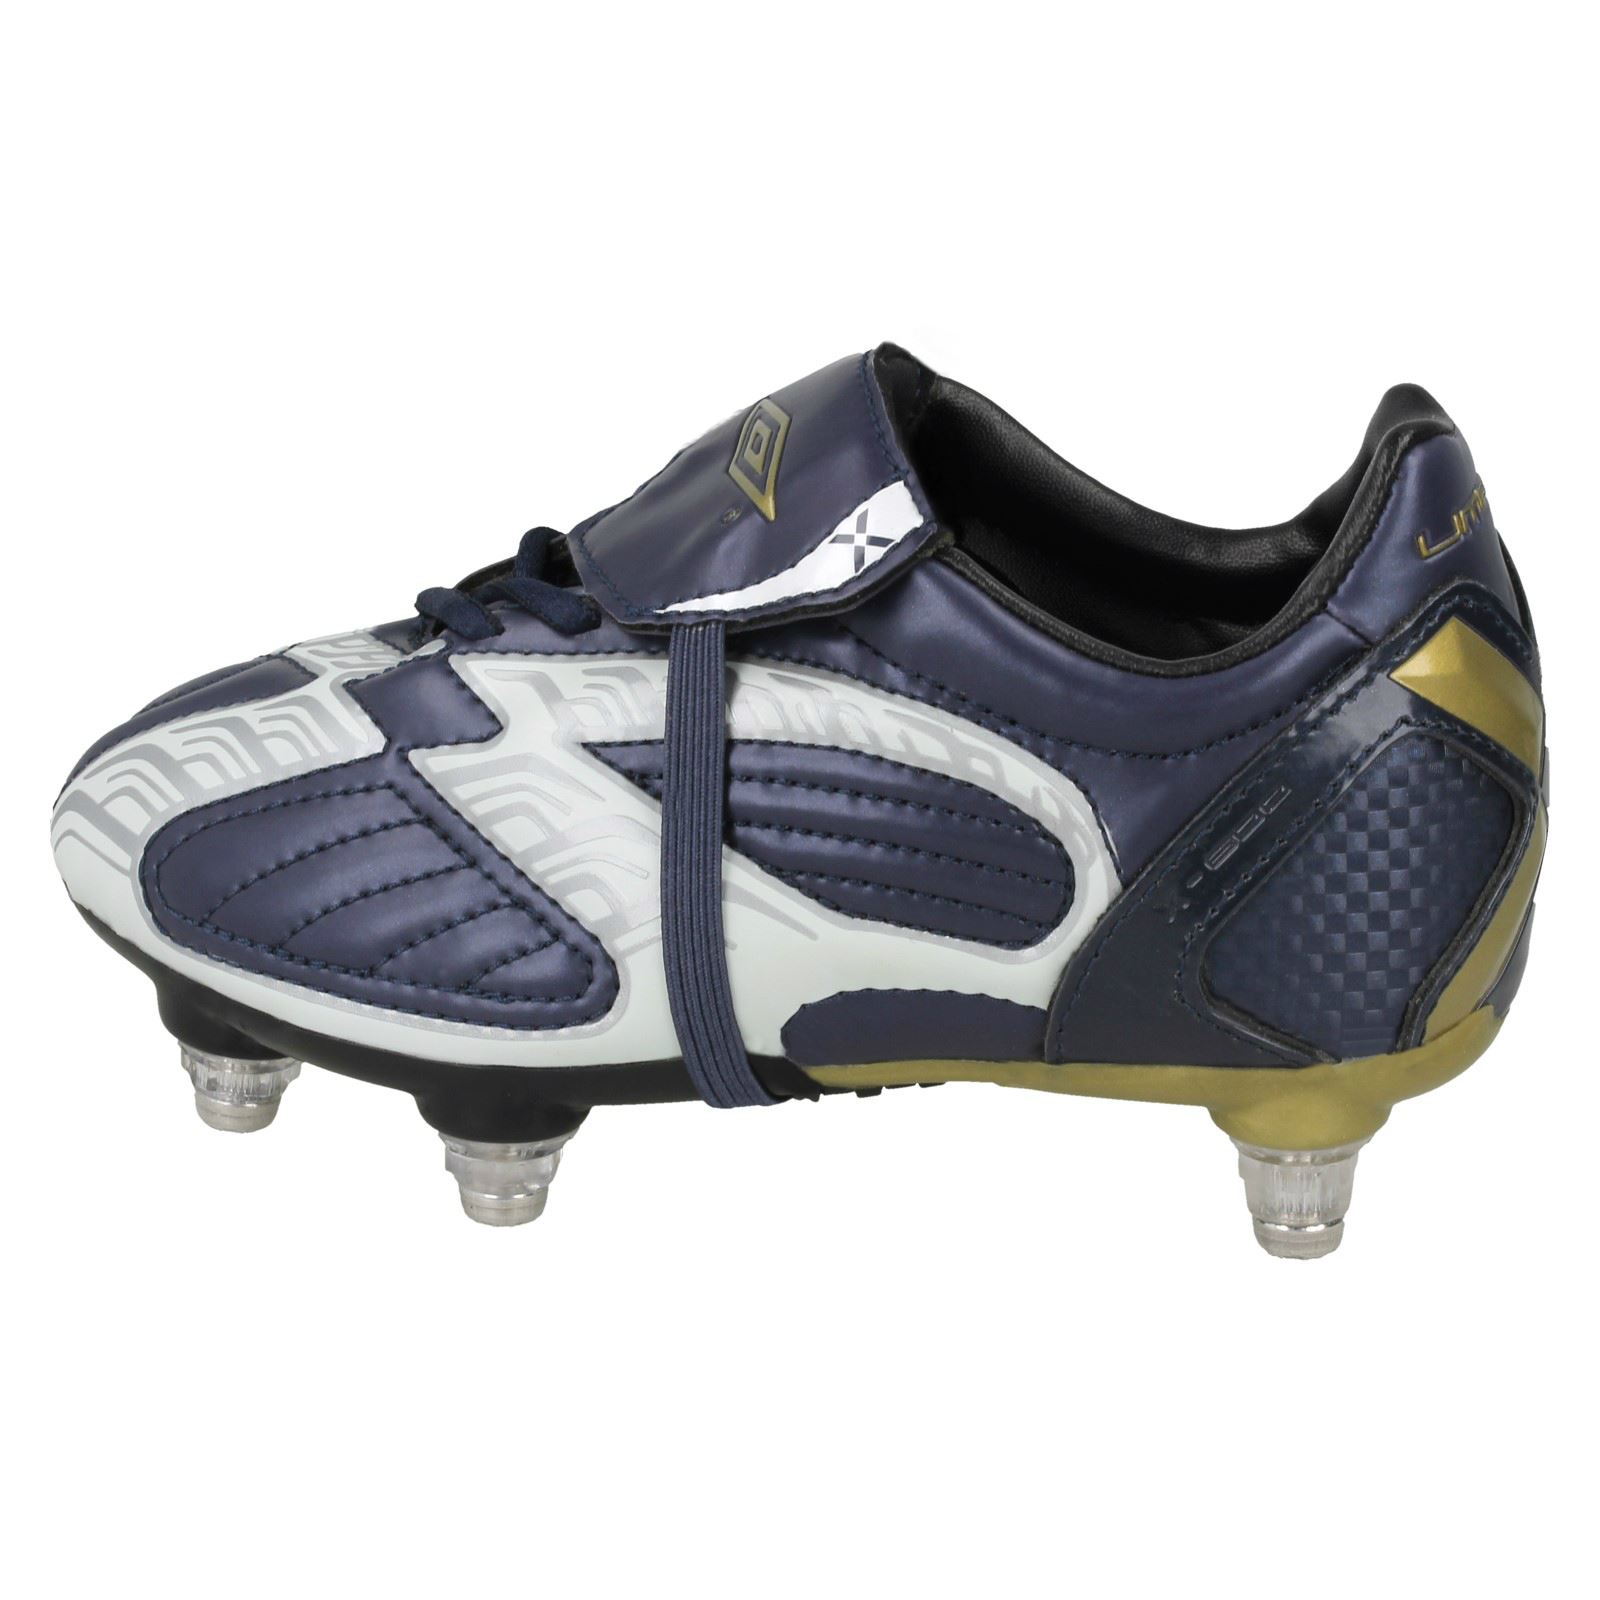 Boys Umbro Football Boots With Studs X-600-J SG | eBay